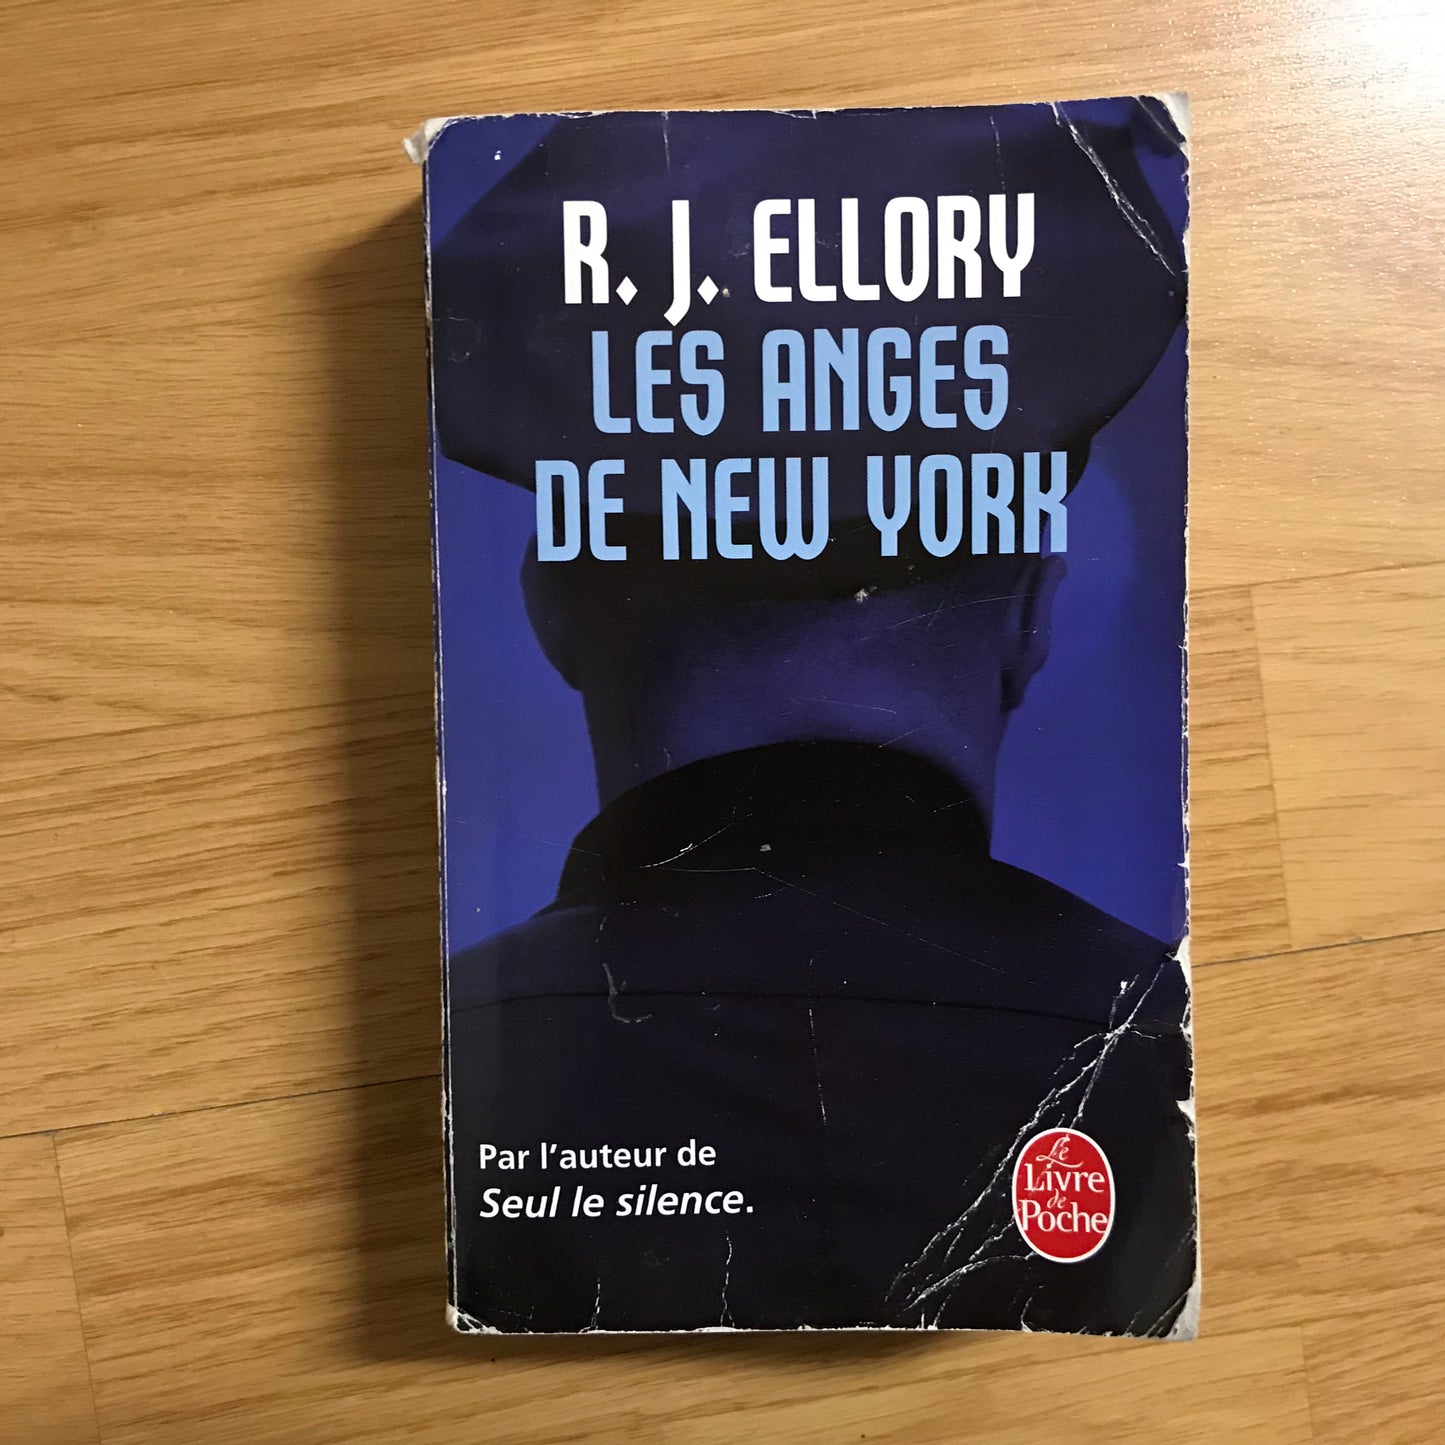 Ellory, R.J. - Les anges de New York